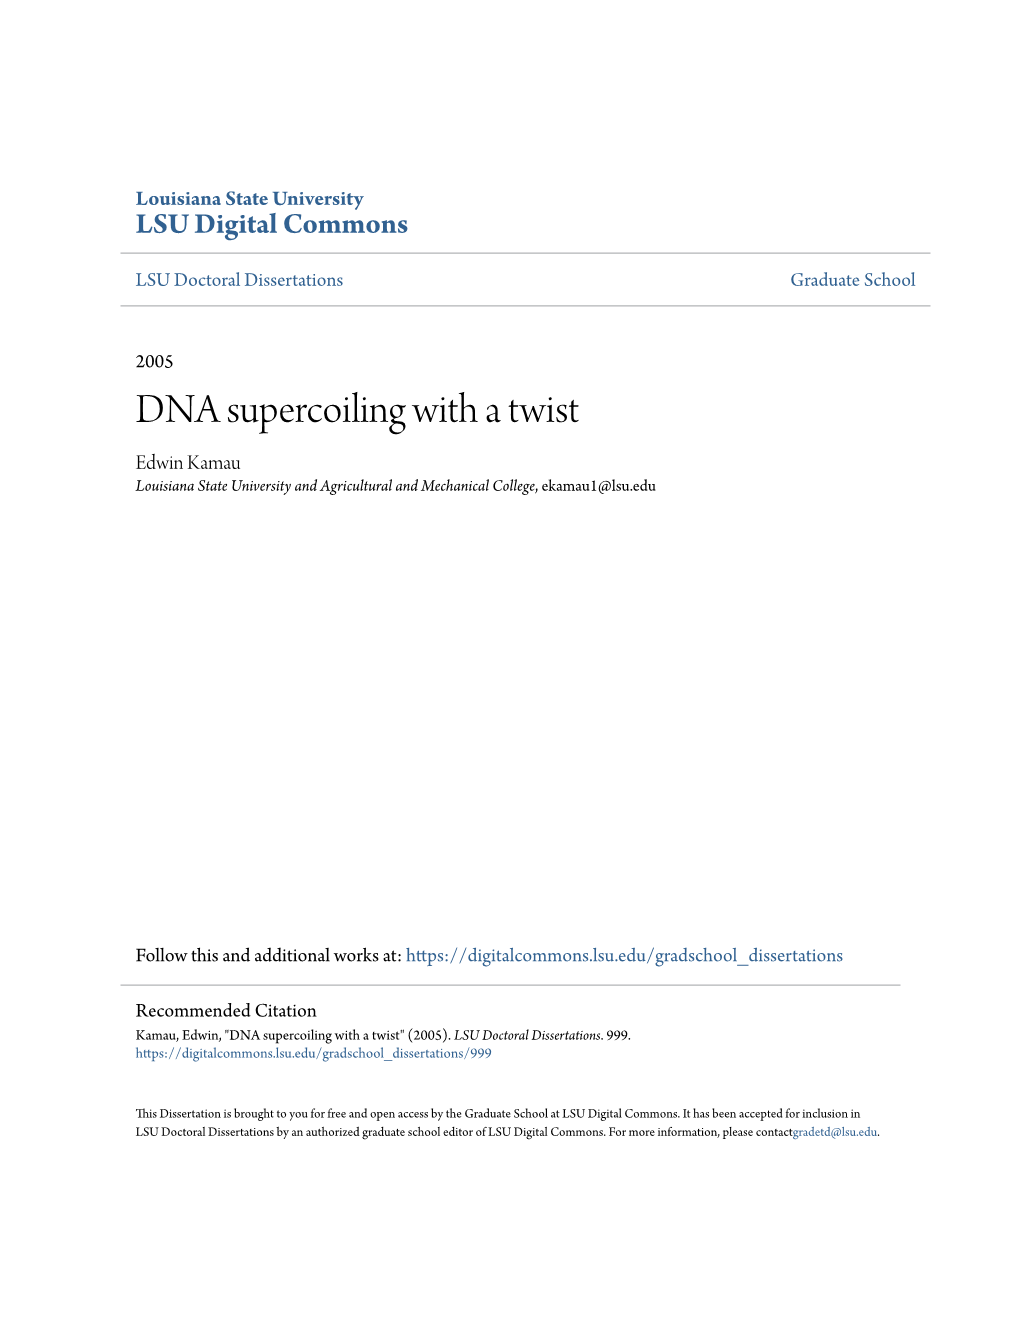 DNA Supercoiling with a Twist Edwin Kamau Louisiana State University and Agricultural and Mechanical College, Ekamau1@Lsu.Edu